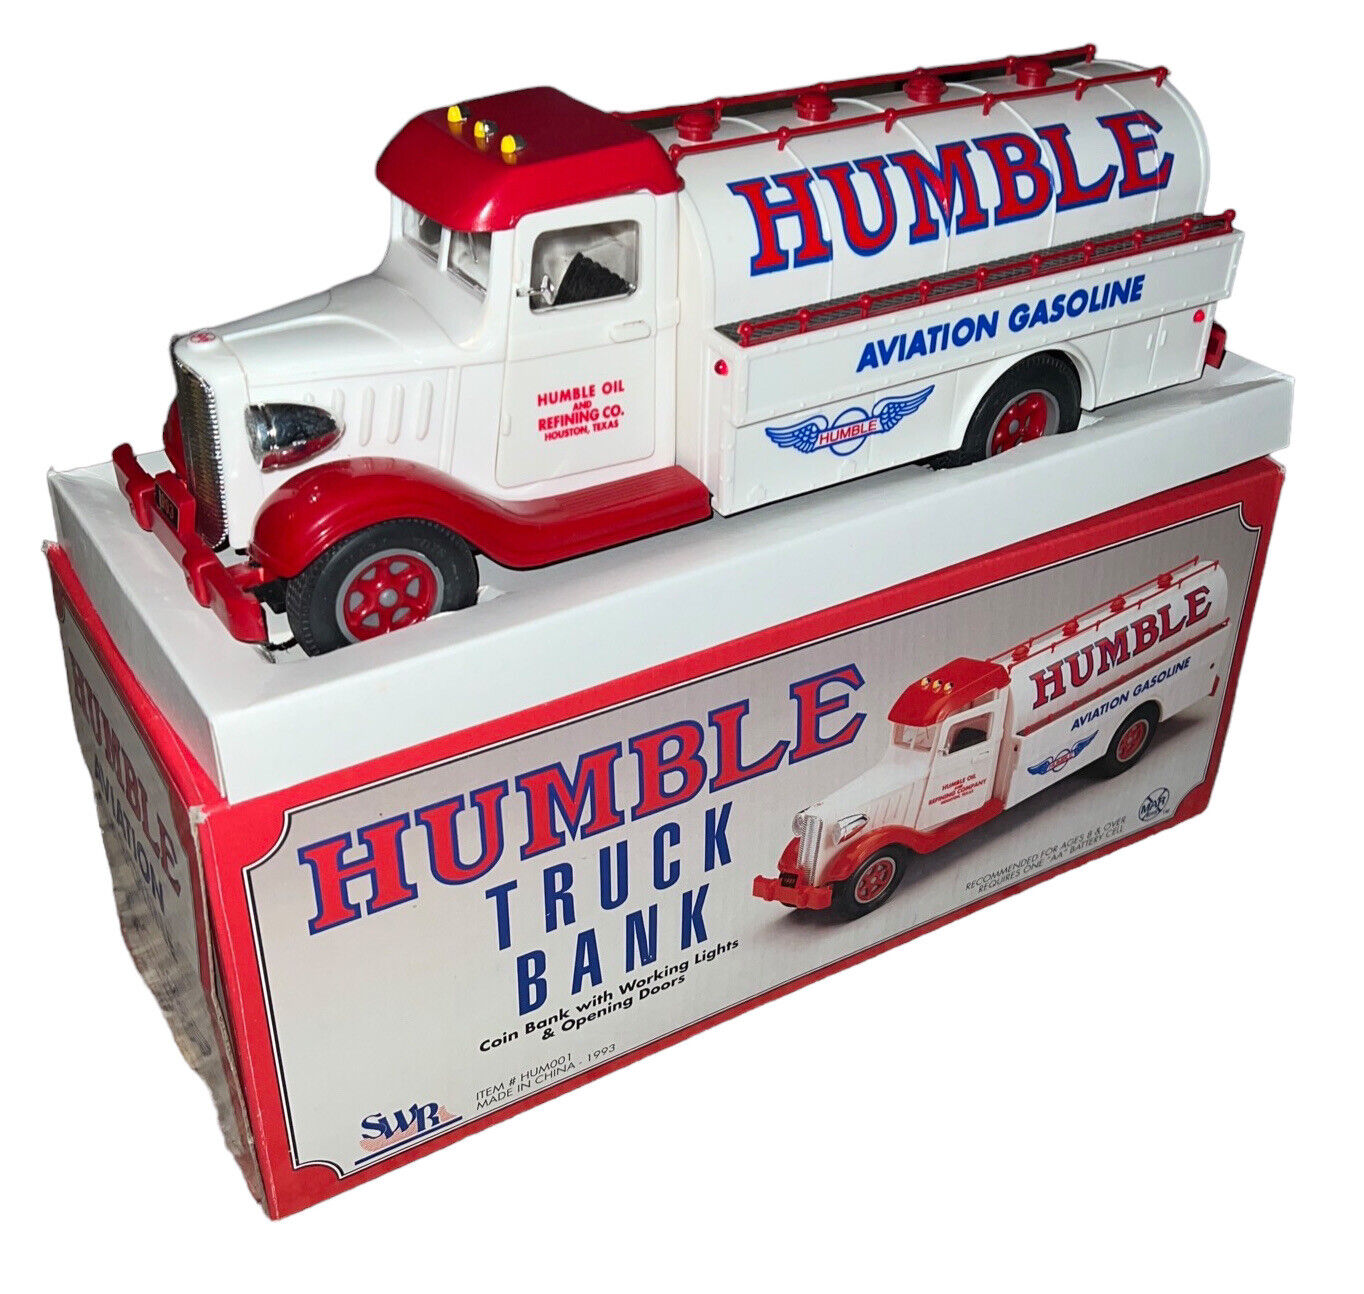 1993 HUMBLE OIL TRUCK BANK #HUM001 ORIGINAL BOX MARX FOR SWR AVIATION GASOLINE